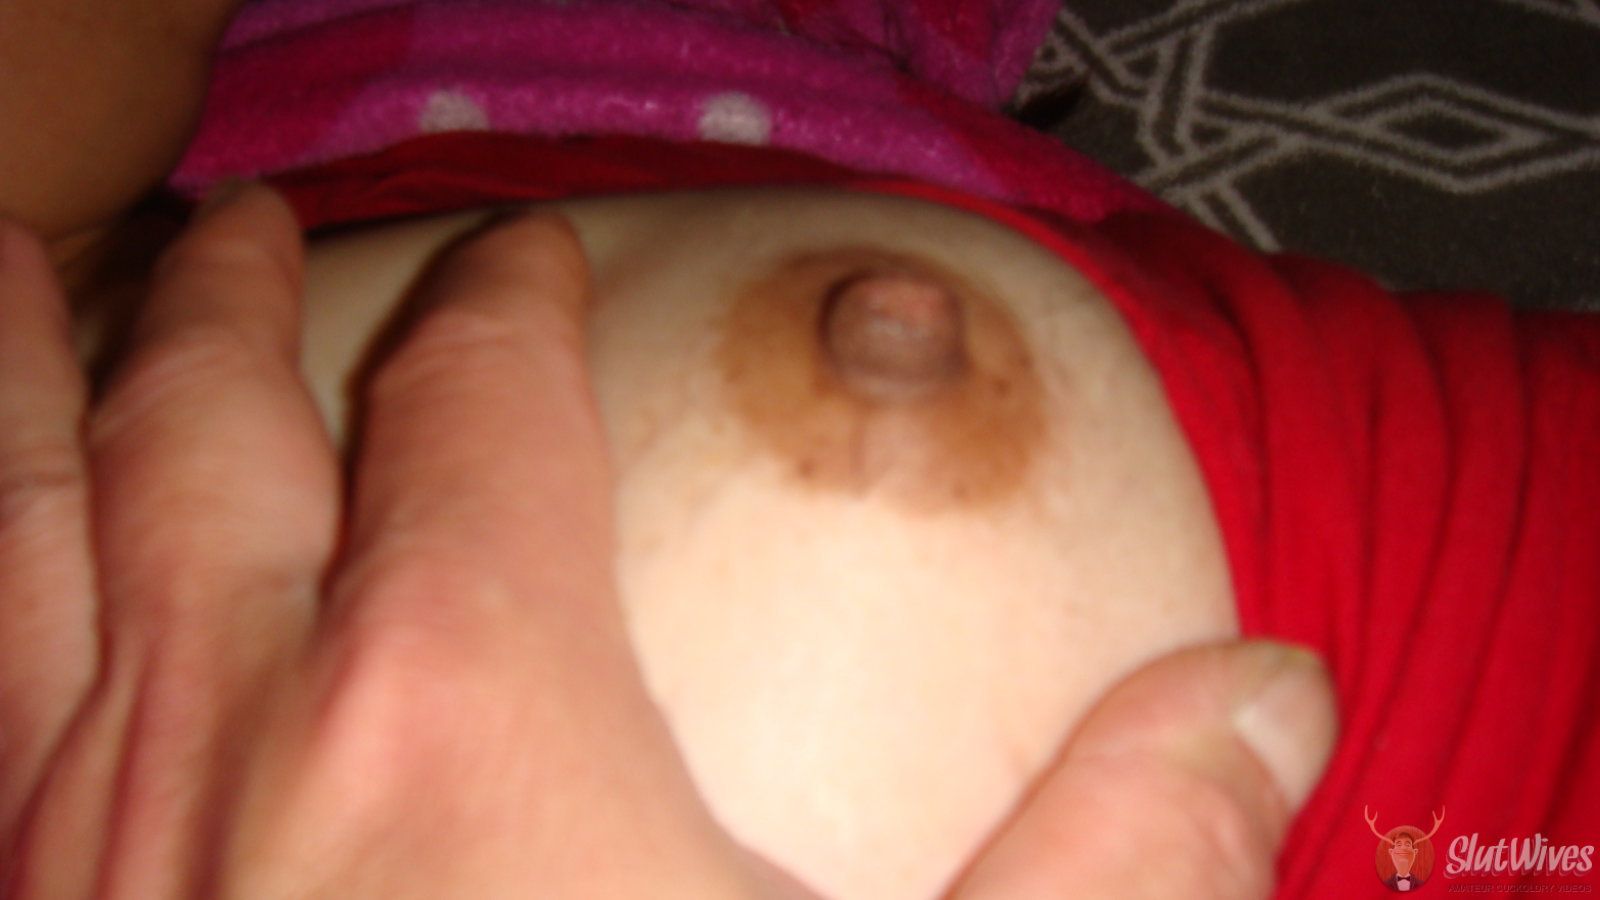 Her hard nipples